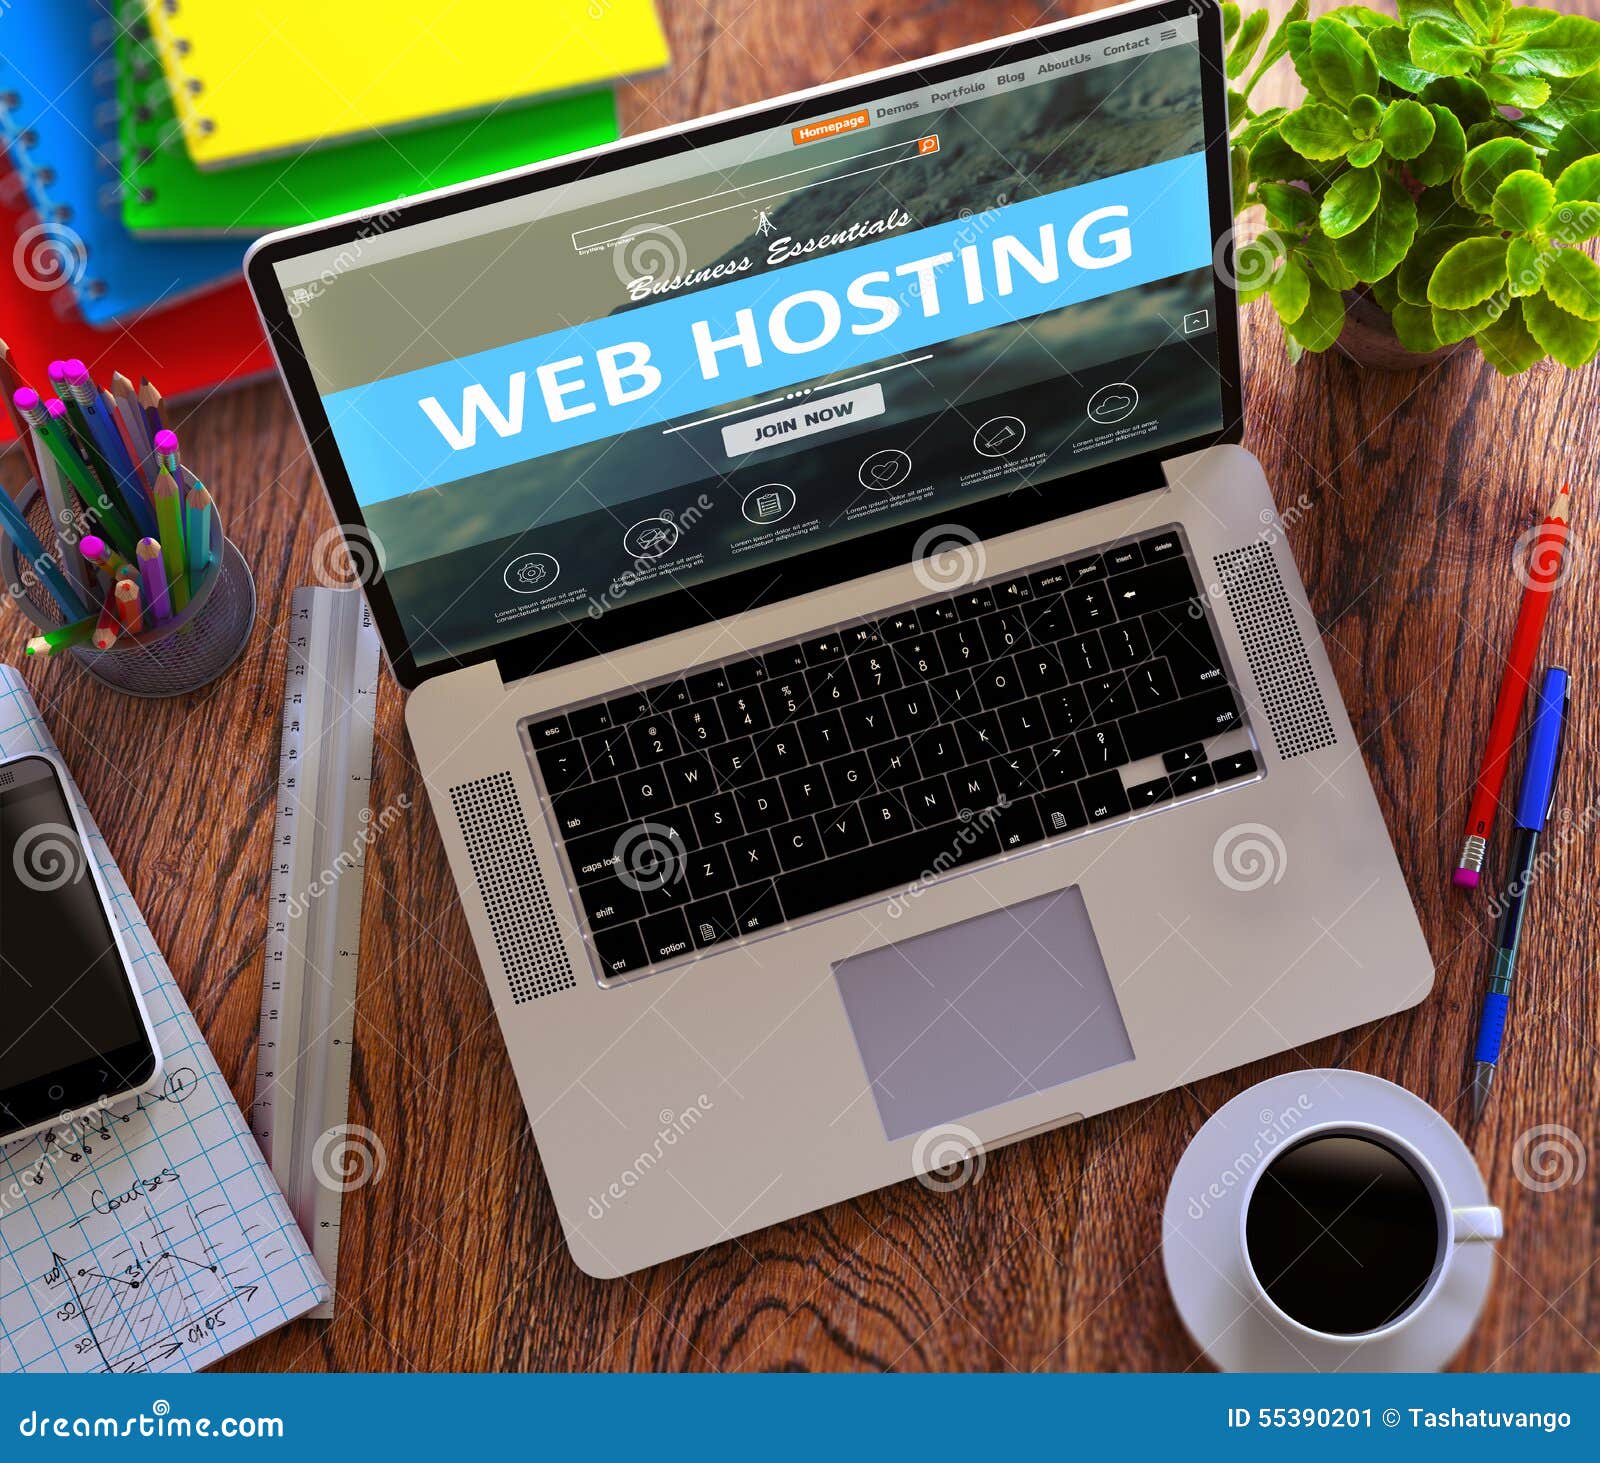 web hosting concept on modern laptop screen